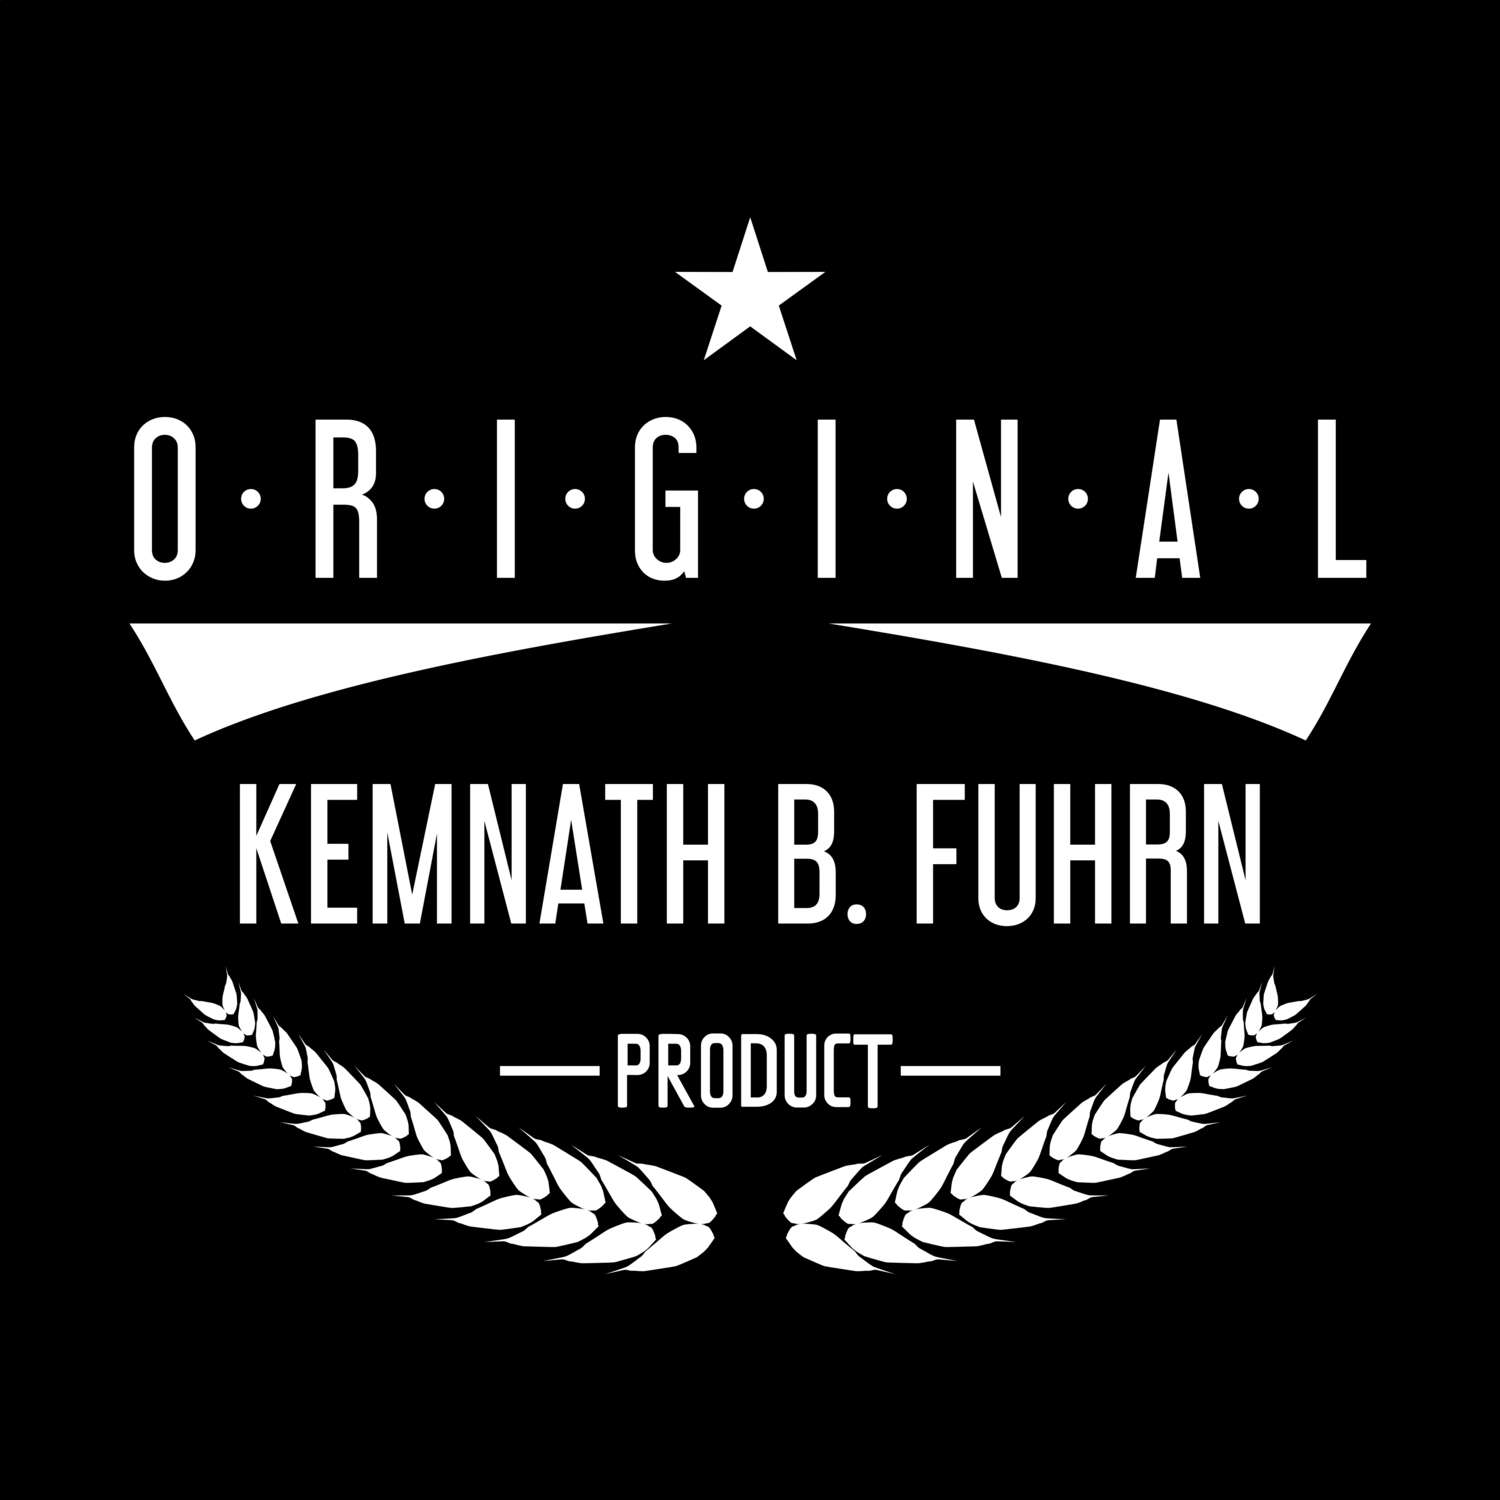 Kemnath b. Fuhrn T-Shirt »Original Product«